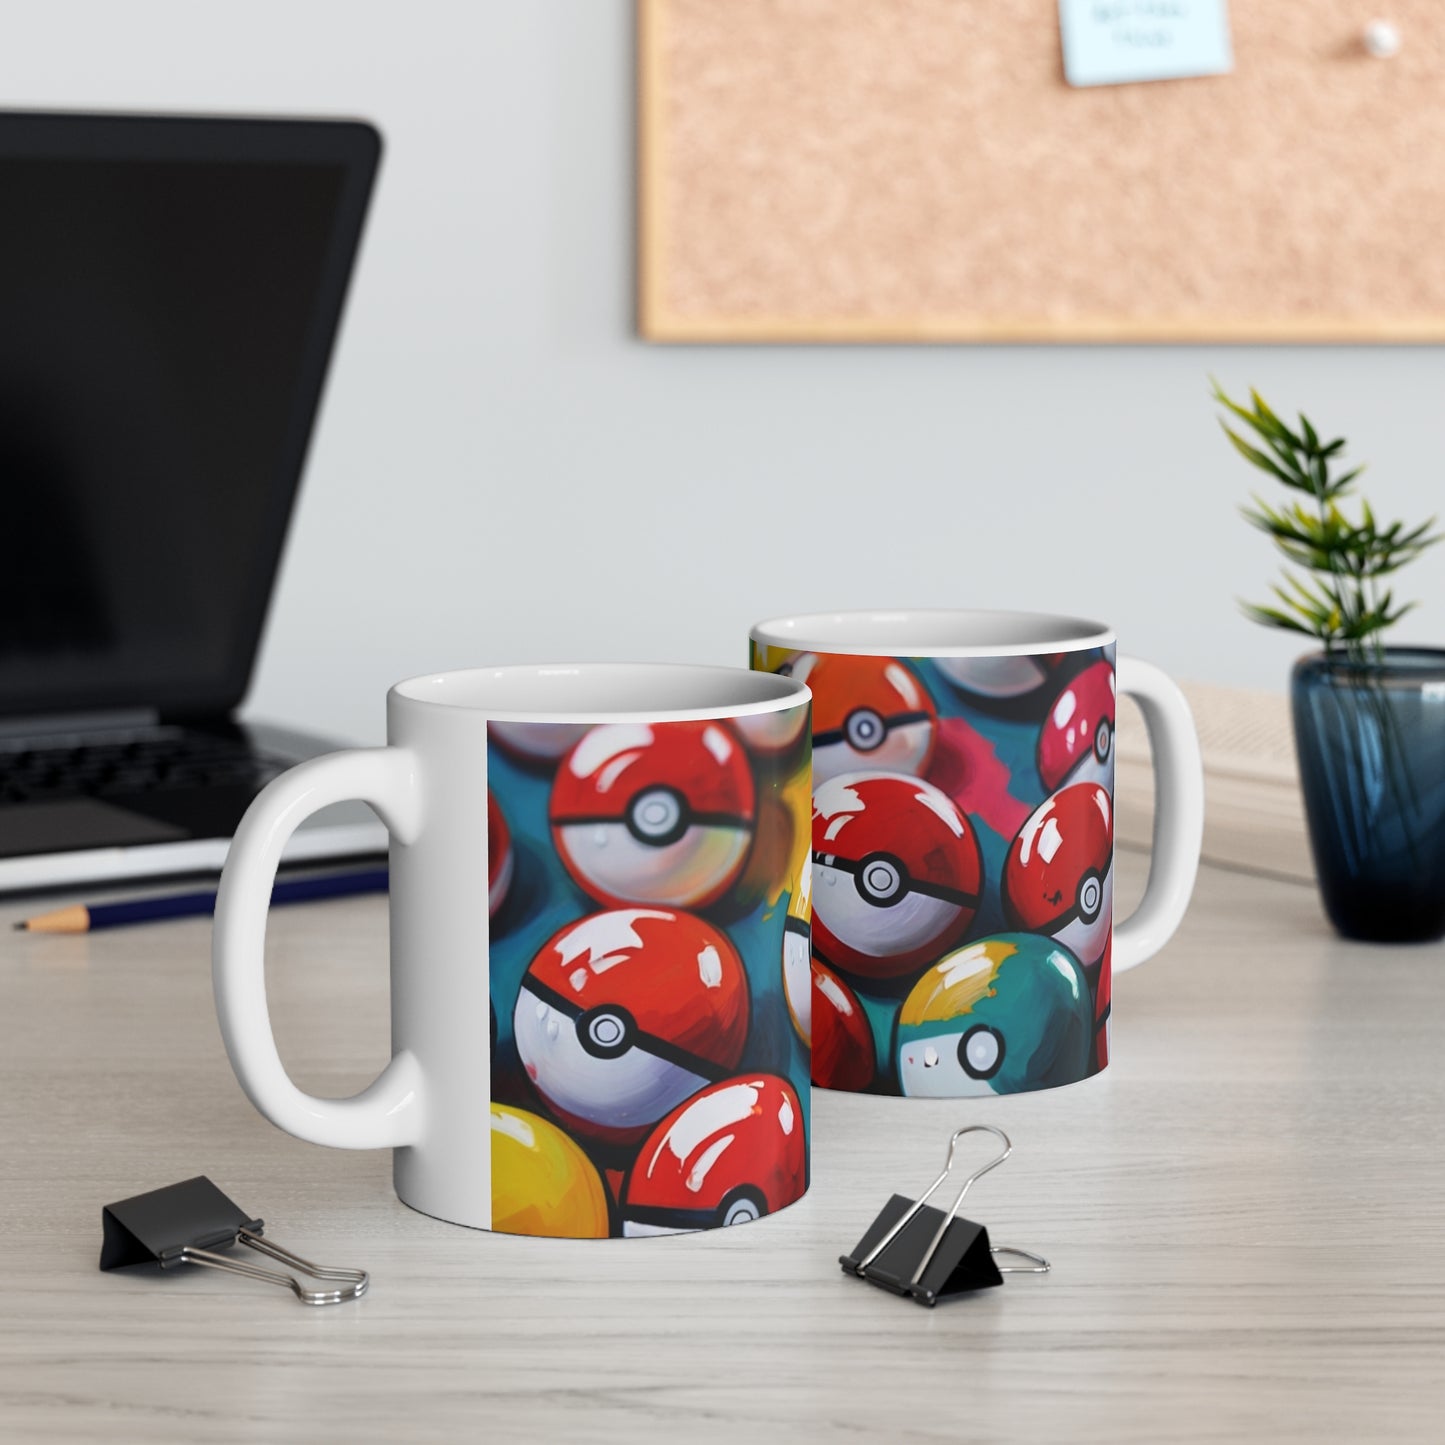 Paint Style Poke-Balls Mug - Ceramic Coffee Mug 11oz